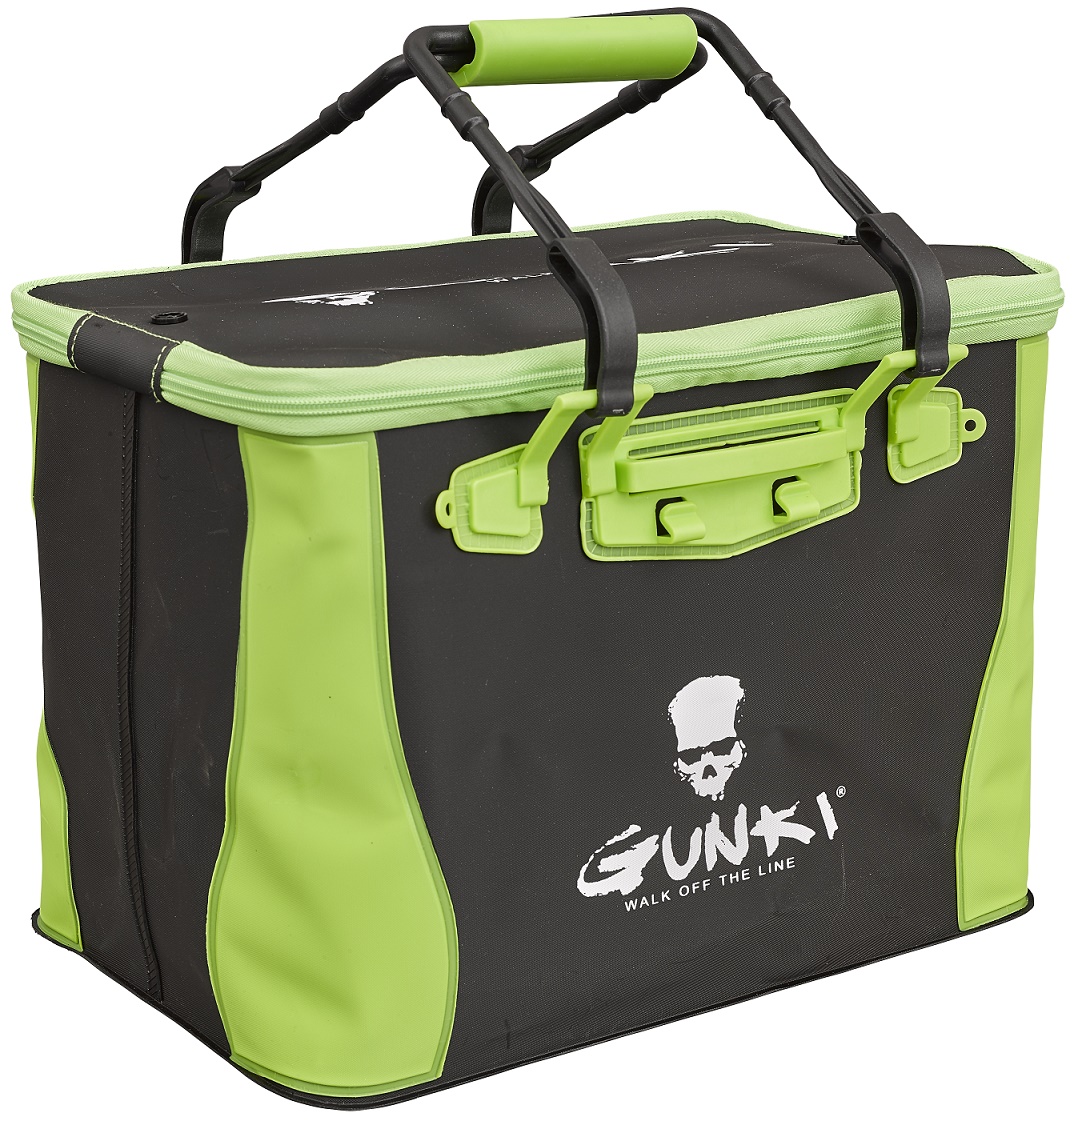 Gunki - Nepromokavá taška Safe Bag Edge 40 Soft